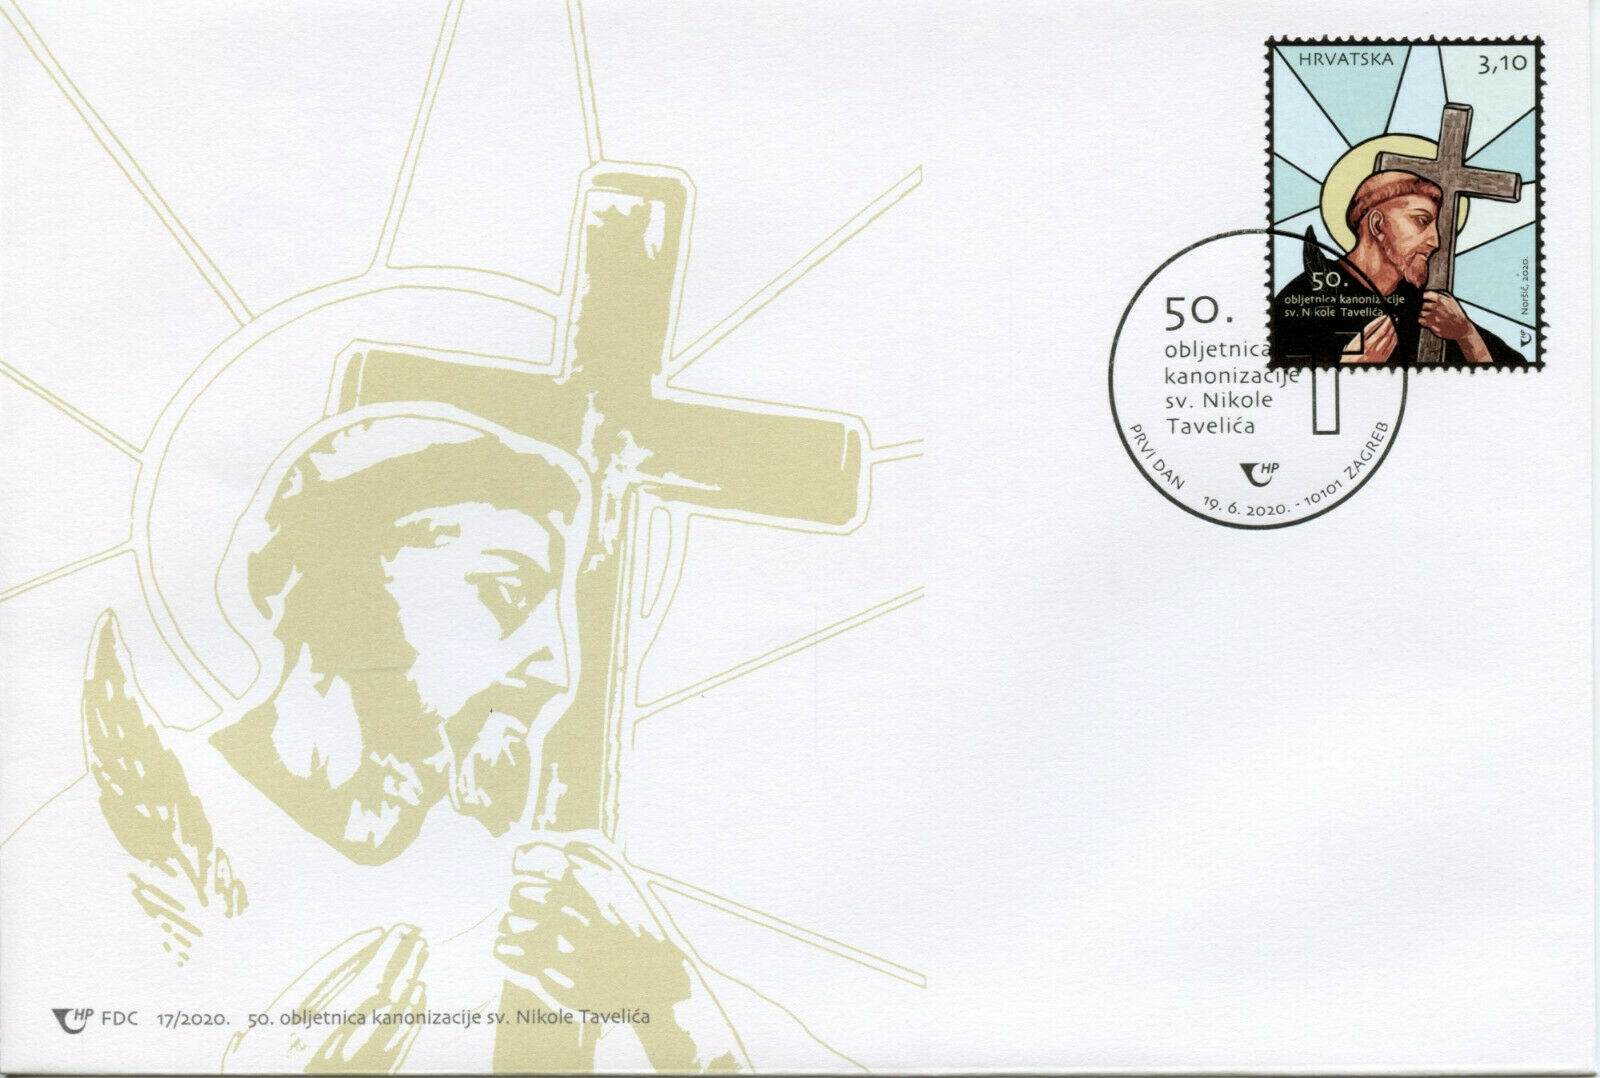 Croatia Saints Stamps 2020 FDC St Nicholas Tavelic Nikola Canonization 1v Set